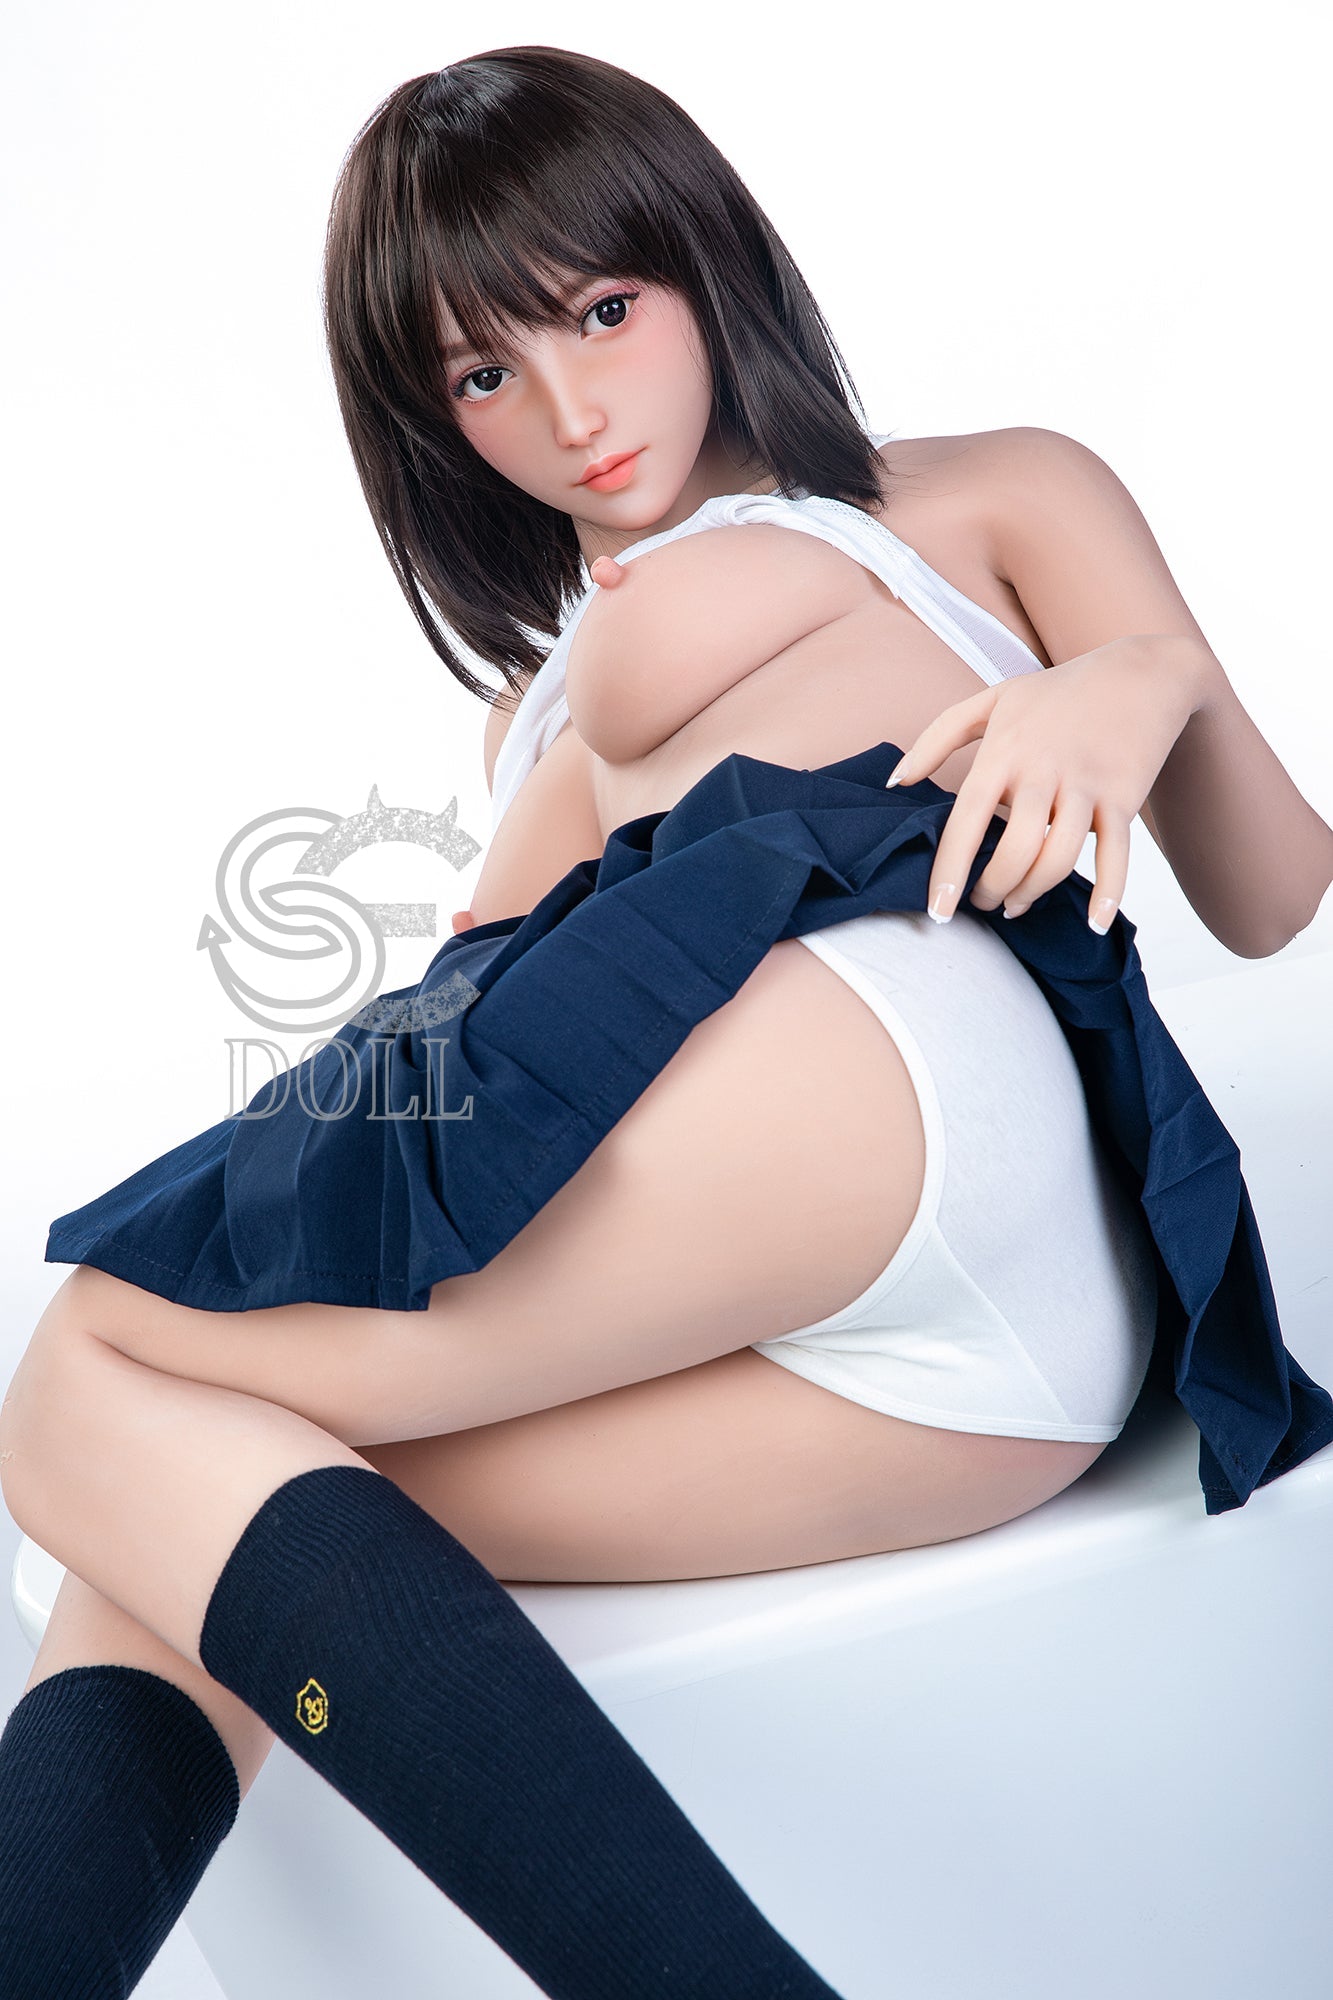 SEDOLL 163 cm E TPE - Yuuki | Buy Sex Dolls at DOLLS ACTUALLY